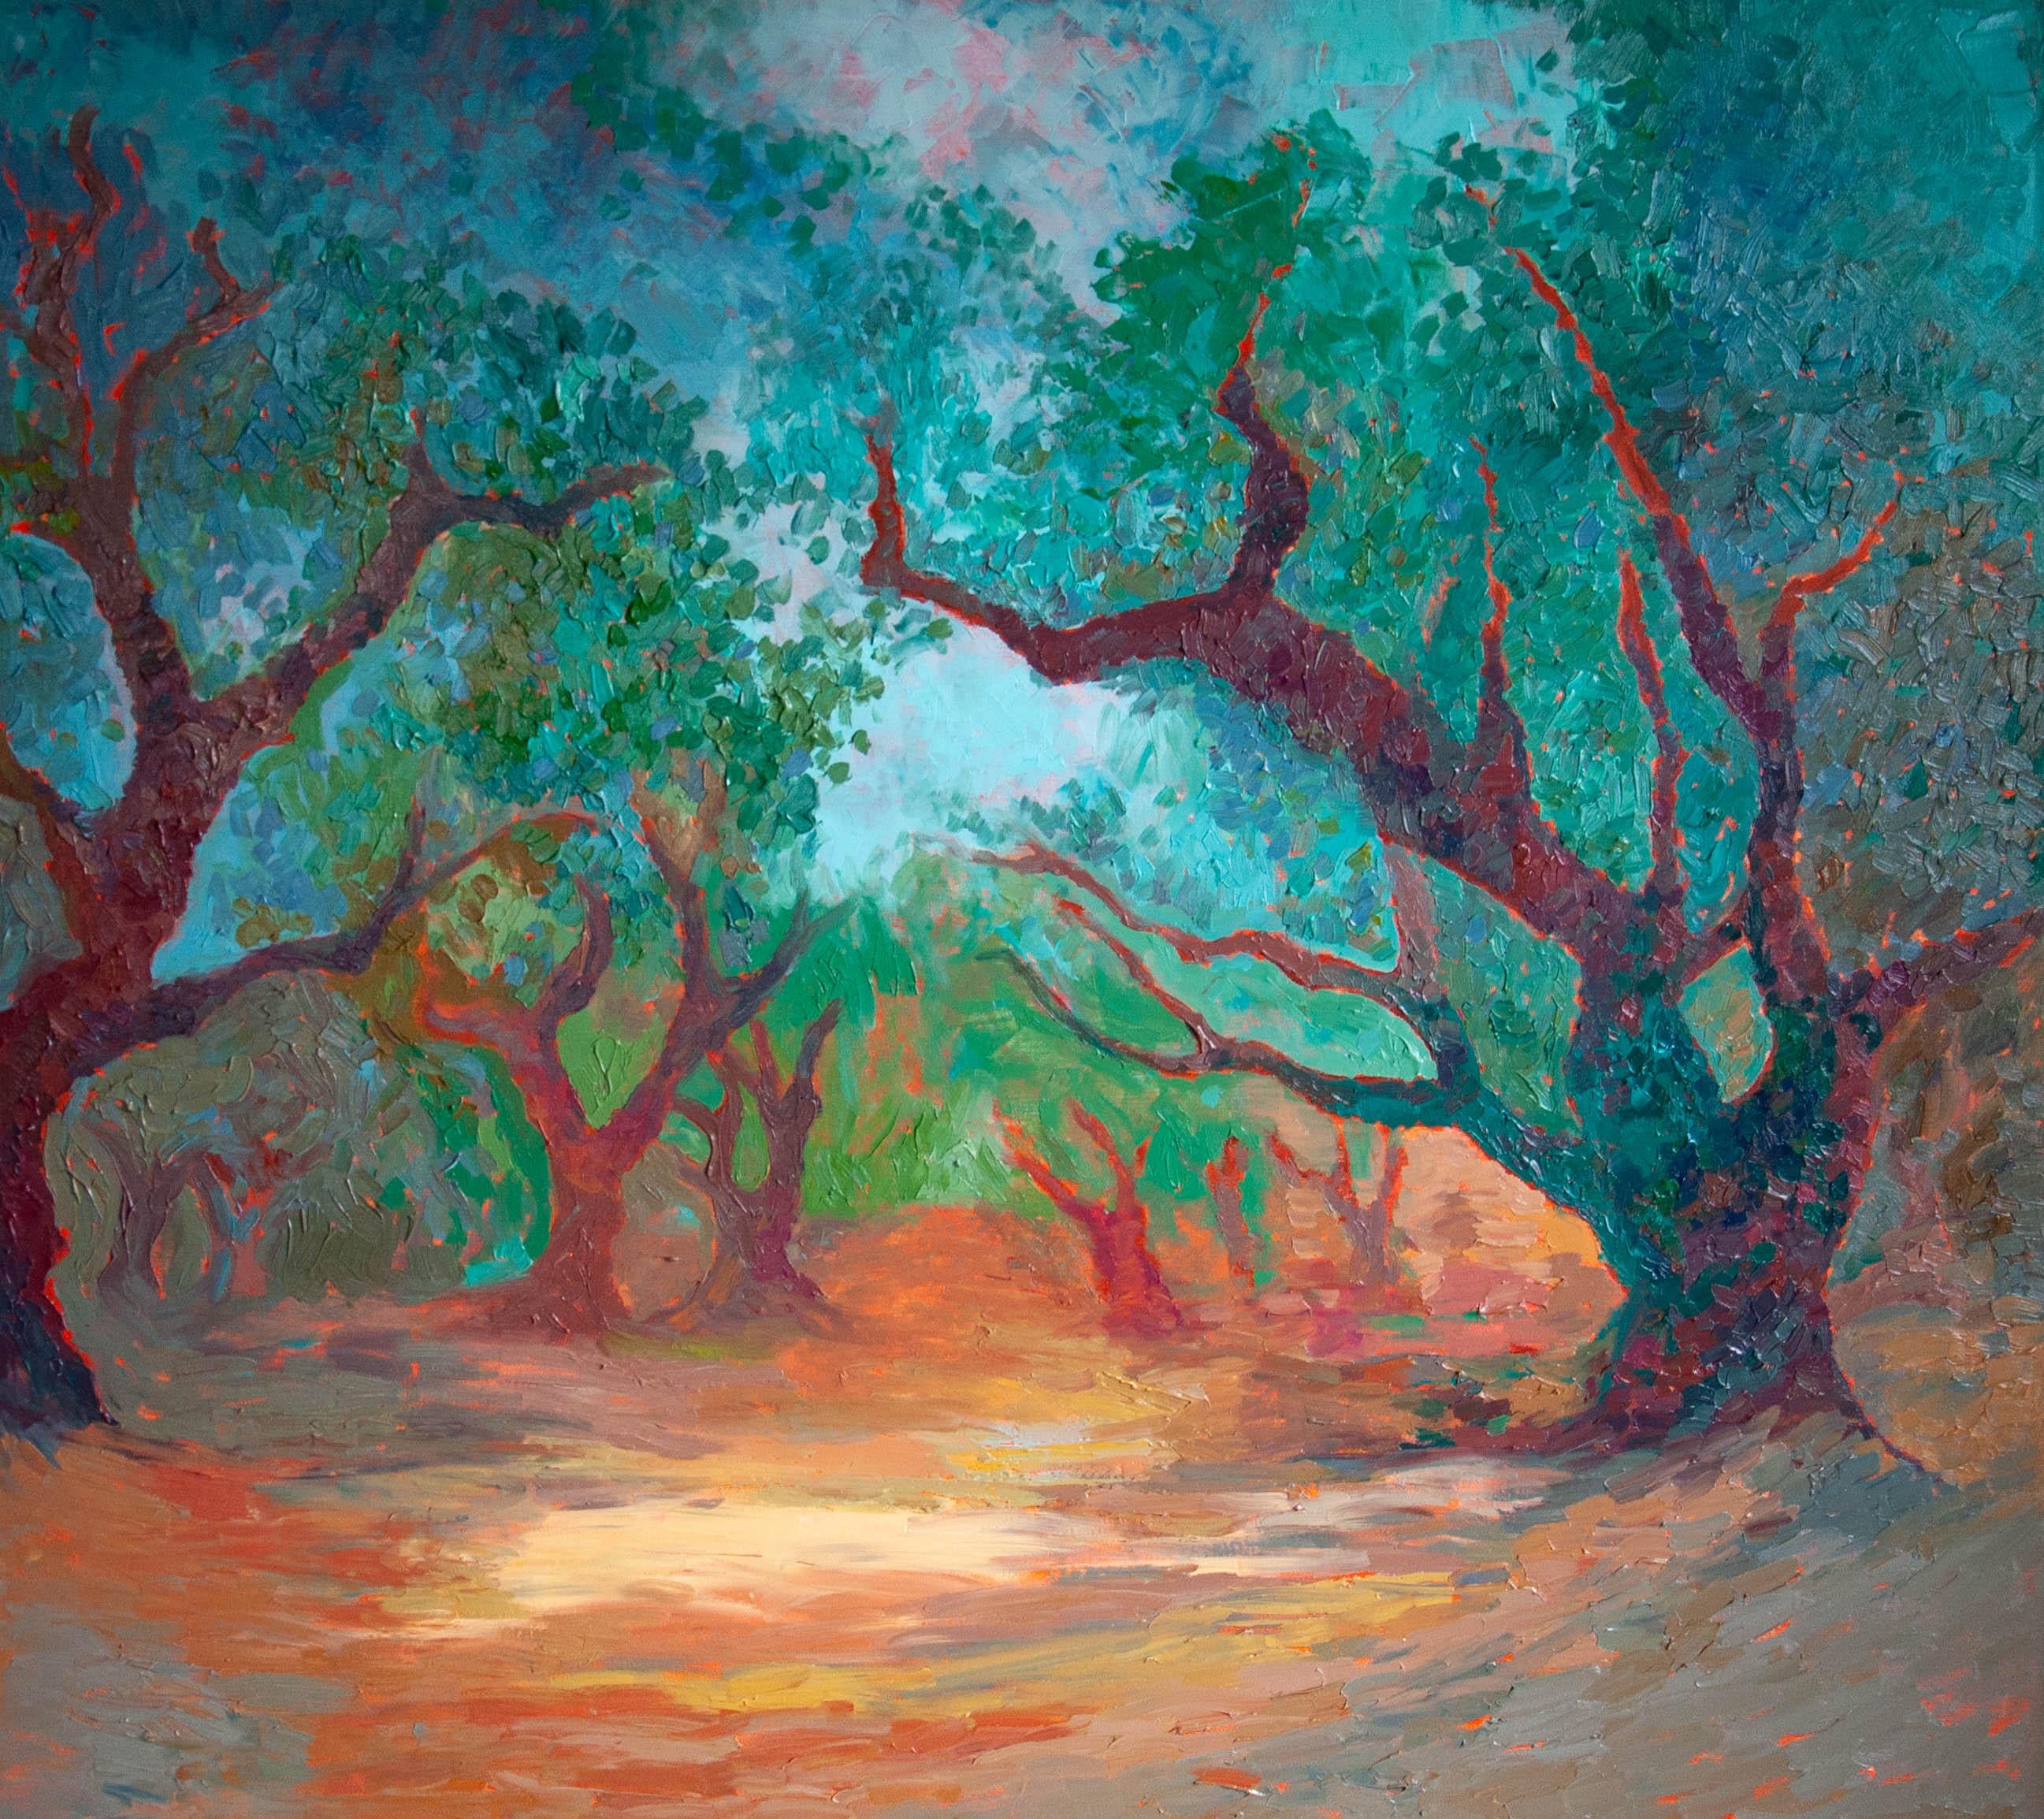 Dasha Pogodina Interior Painting - Landscape Painting - SECRET GARDEN, oil on canvas - 40*32 in (100*80cm)